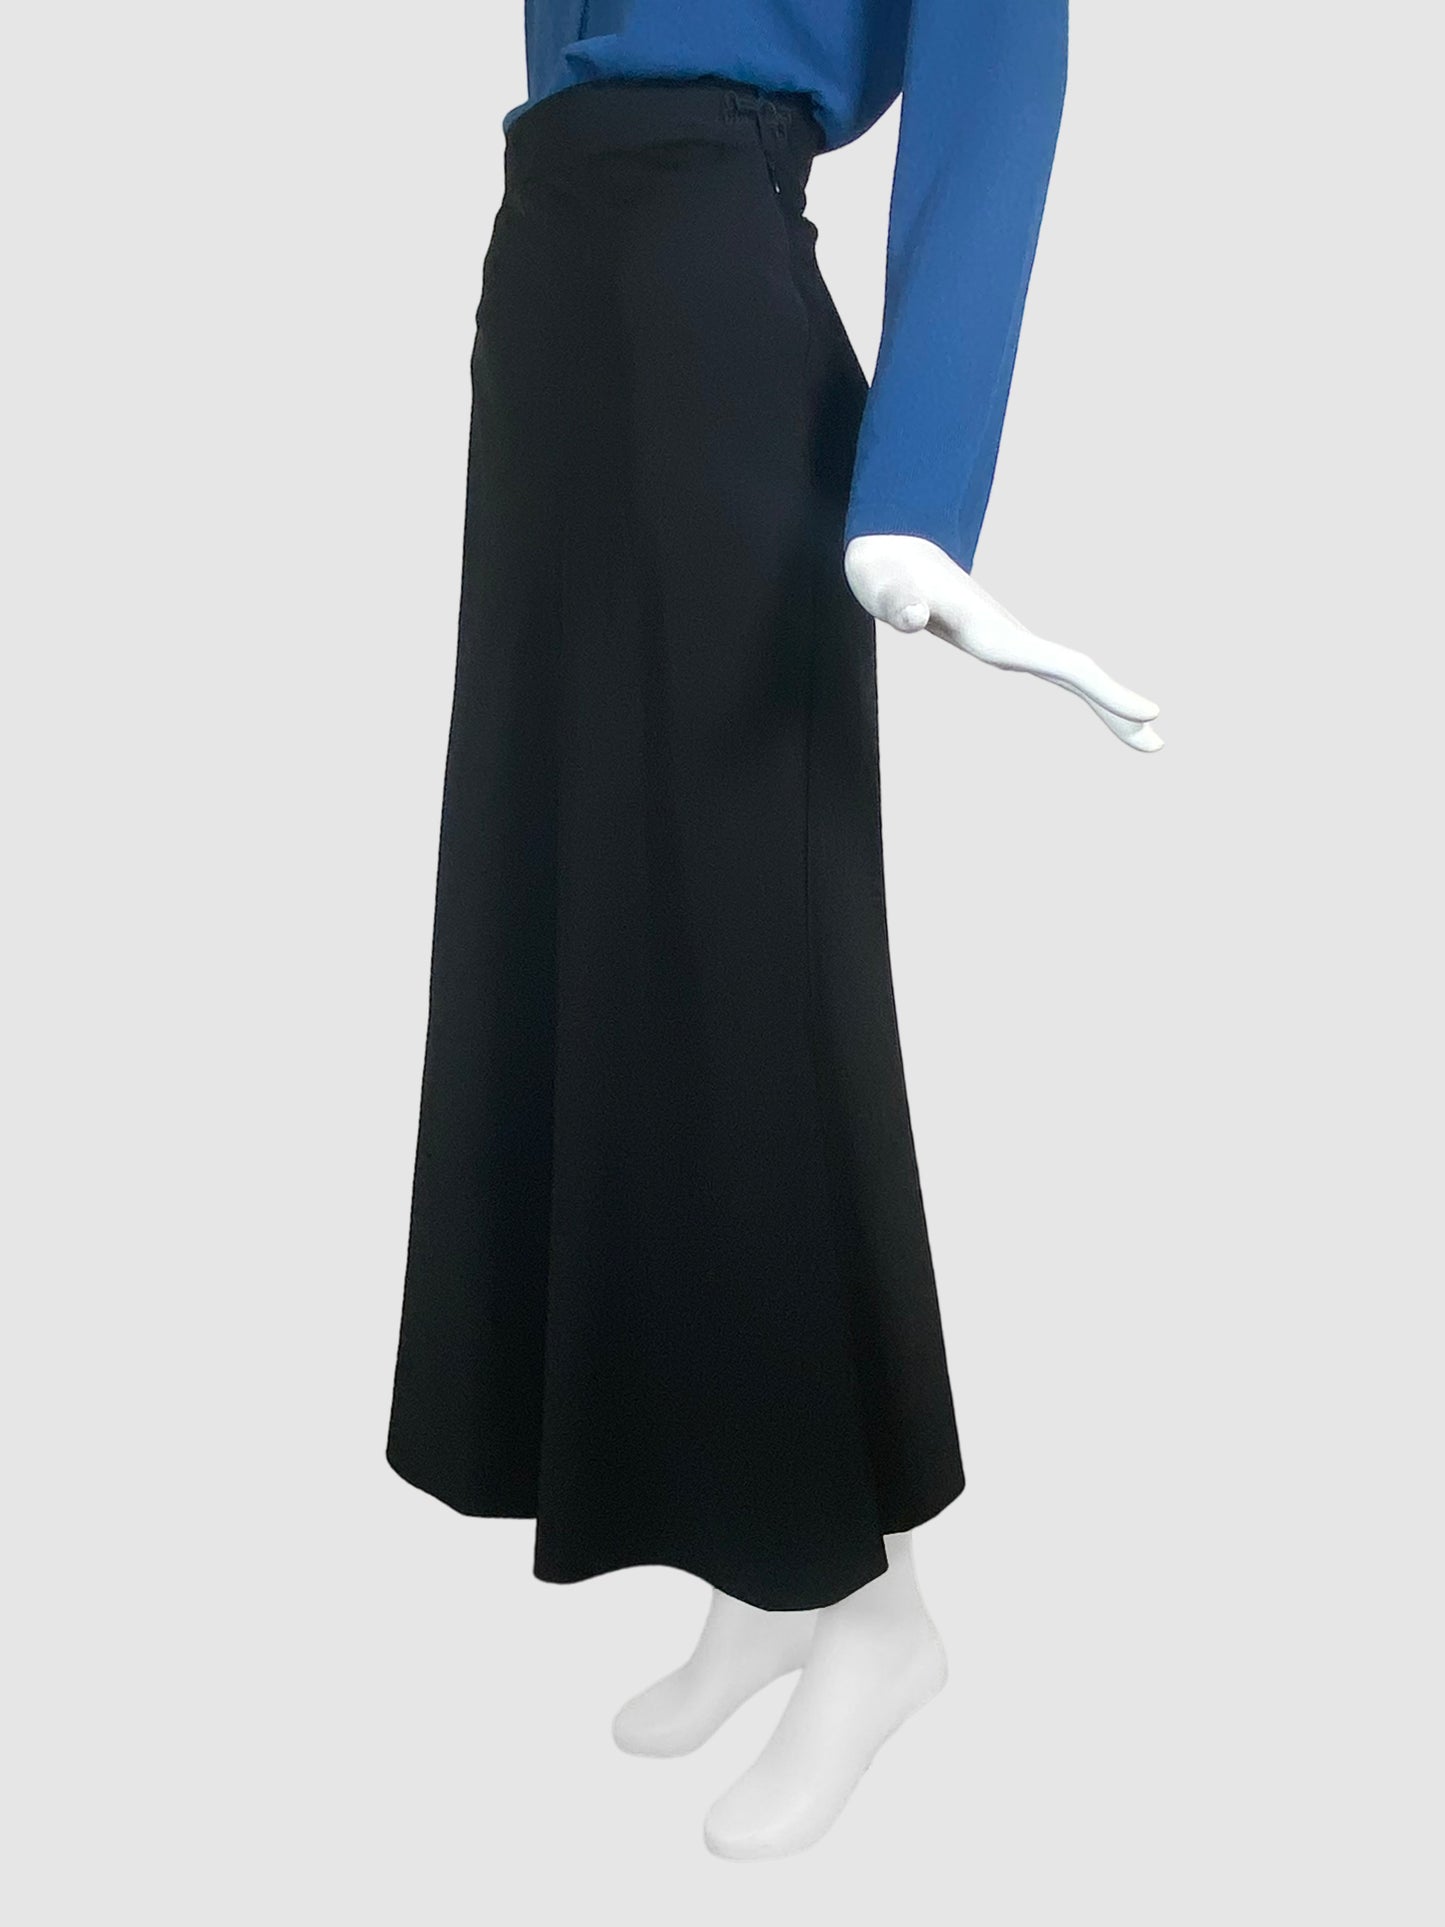 Jean Paul Gaultier Midi Pencil Skirt - Size 6